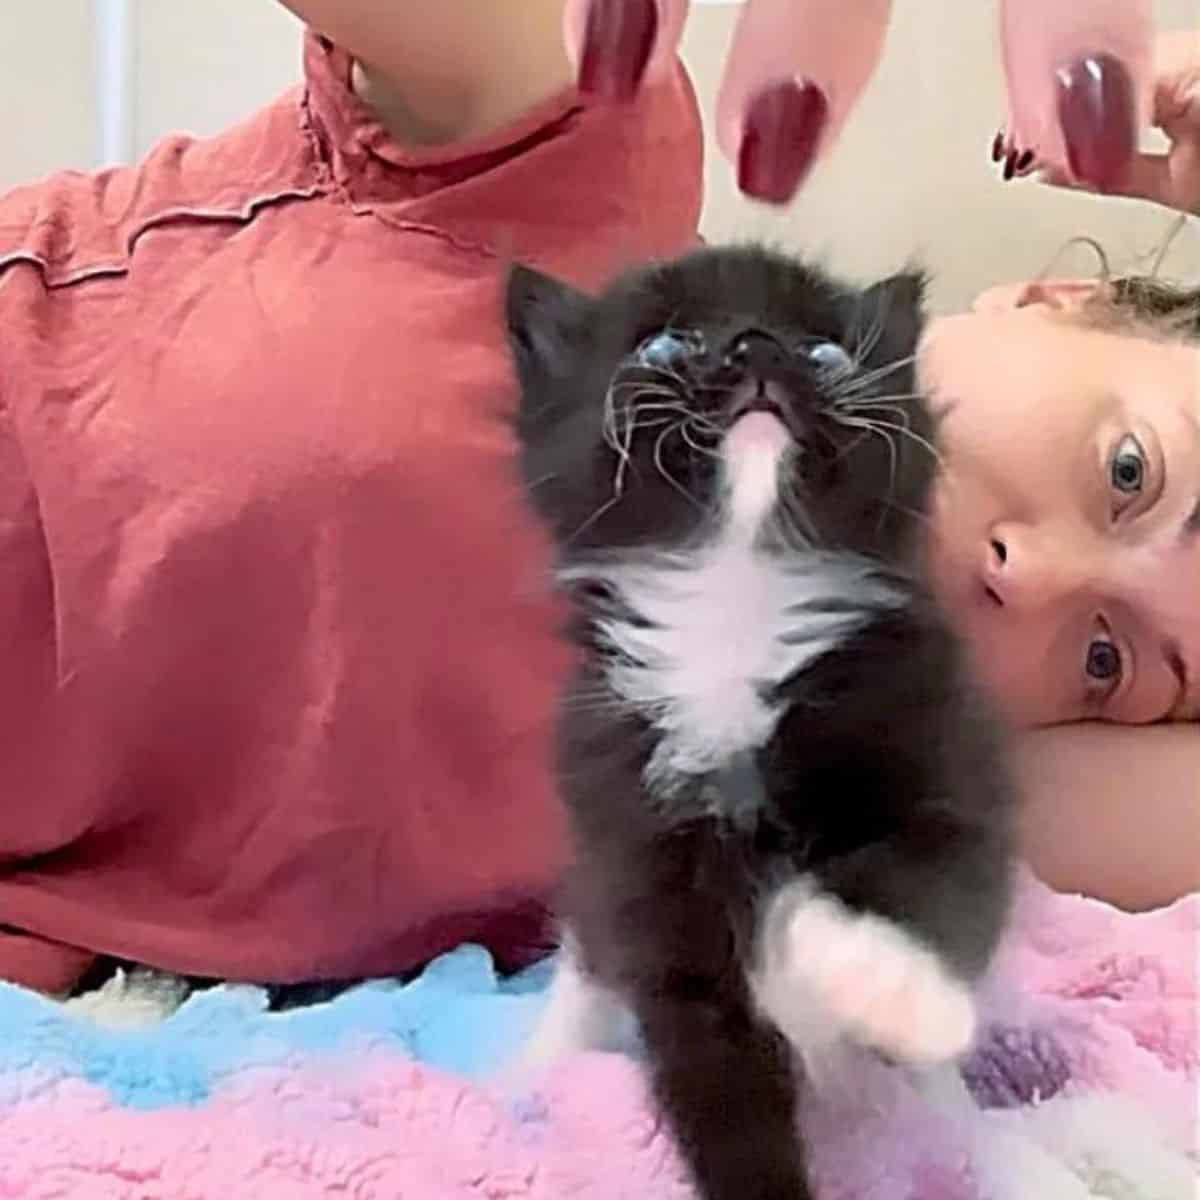 woman lying next to a kitten